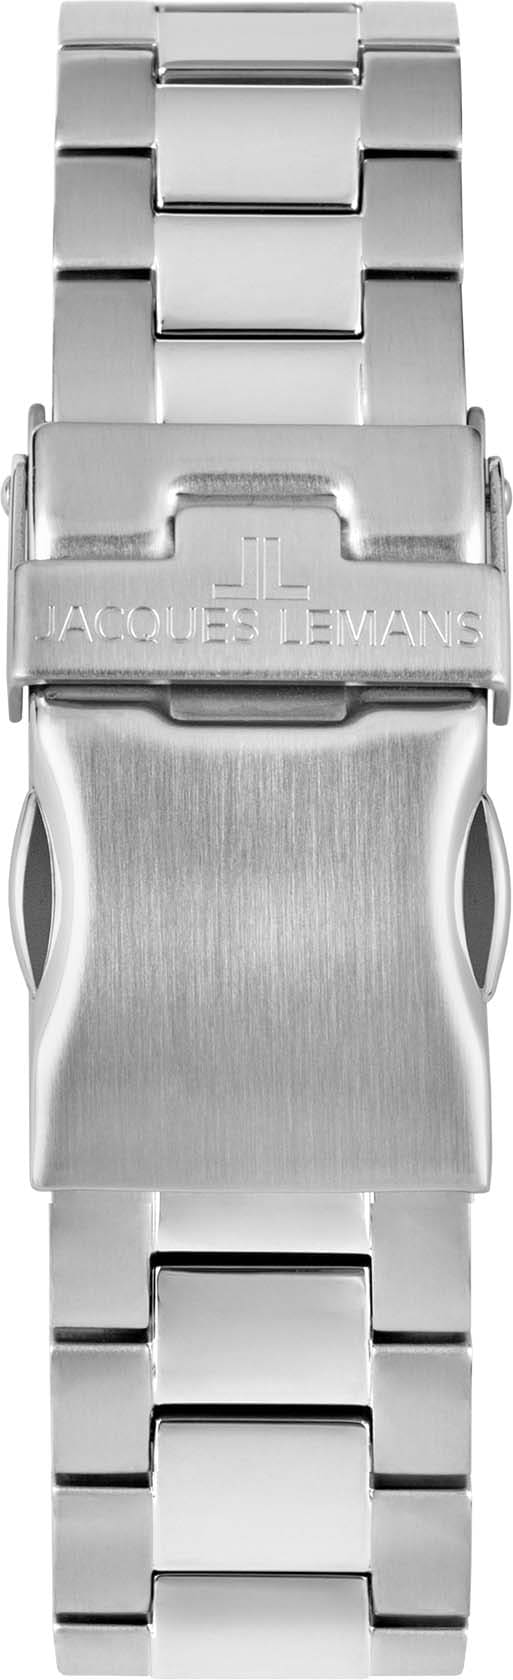 Jacques Lemans Multifunktionsuhr »42-11H« online kaufen | BAUR